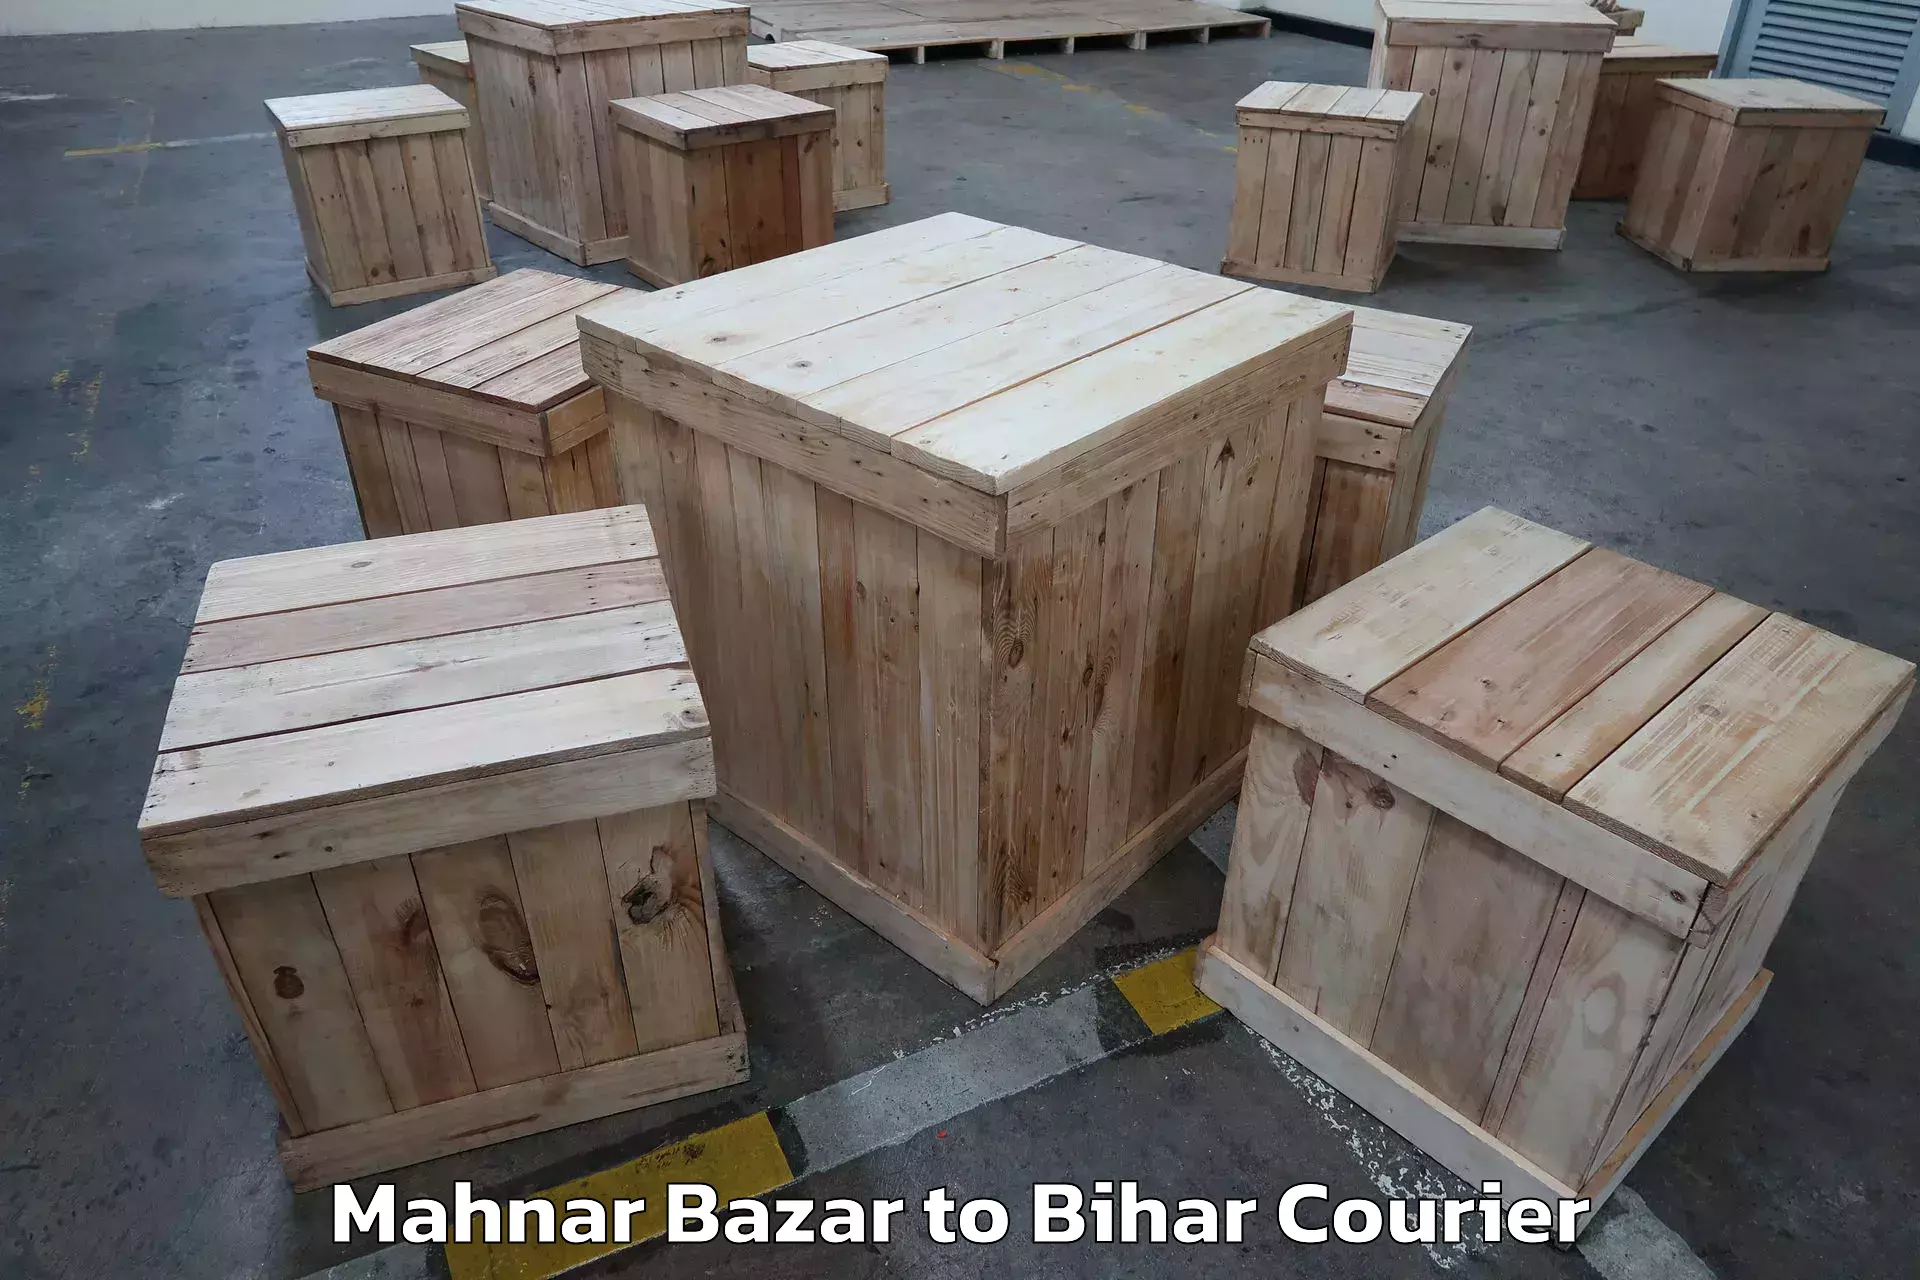 Full-service movers in Mahnar Bazar to Maheshkhunt